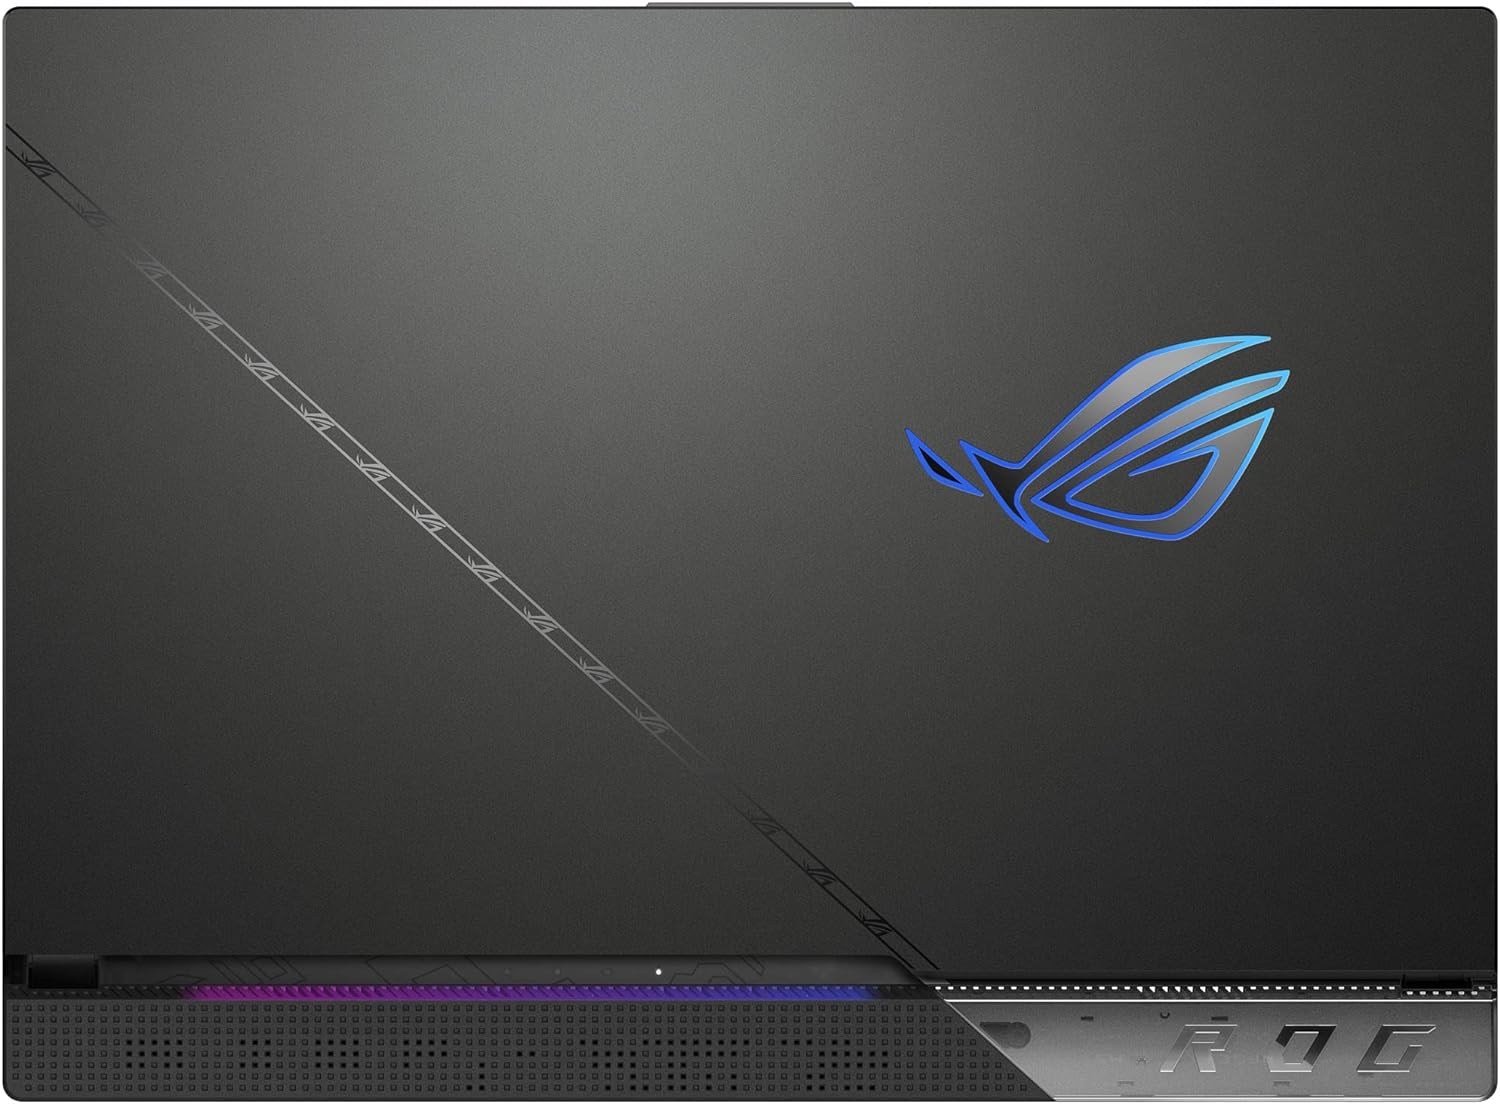 ASUS ROG Strix Scar 15 Gaming  Entertainment Laptop (Intel i9-12900H 14-Core, 32GB DDR5 4800MHz RAM, 2x4TB PCIe SSD RAID 1 (4TB), GeForce RTX 3080 Ti, 15.6 240Hz Win 11 Pro)